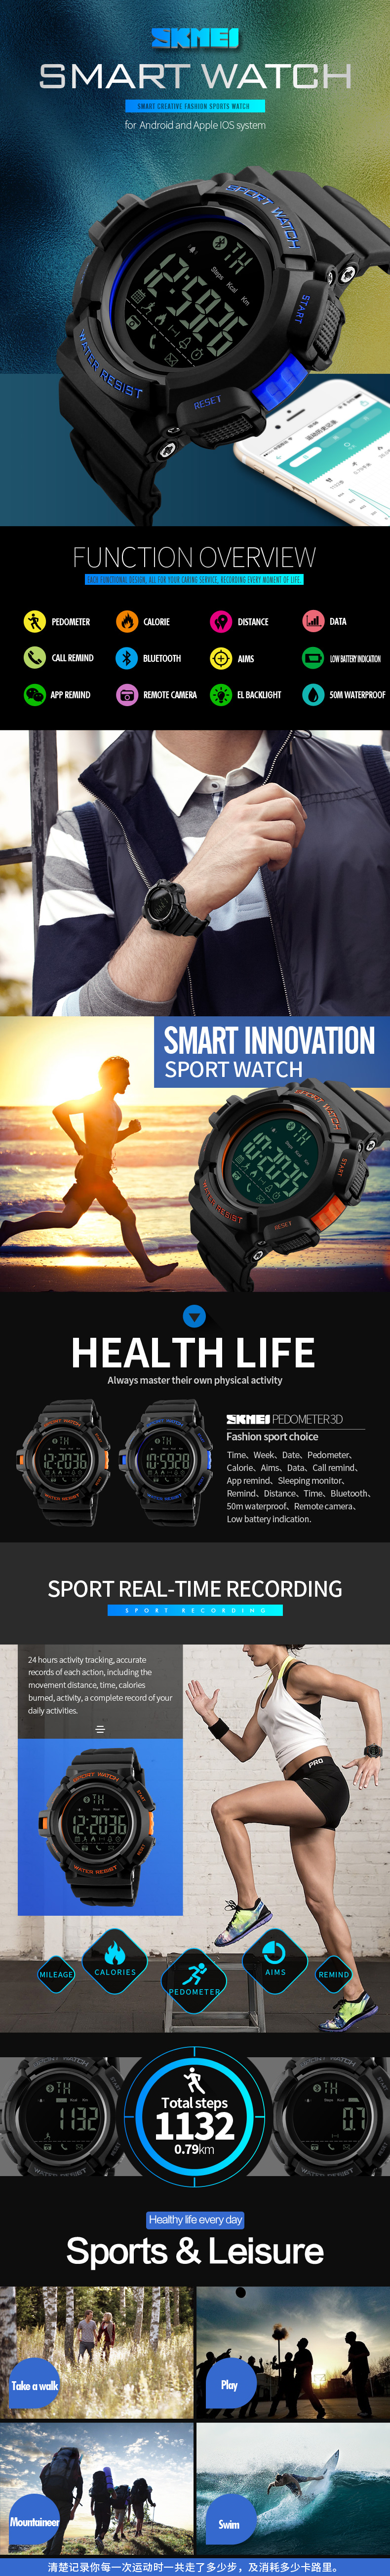 SKMEI-1245-50M-Waterproof-Intelligent-Bluetooth-Watch-Fashion-Style-Stopwatch-1206088